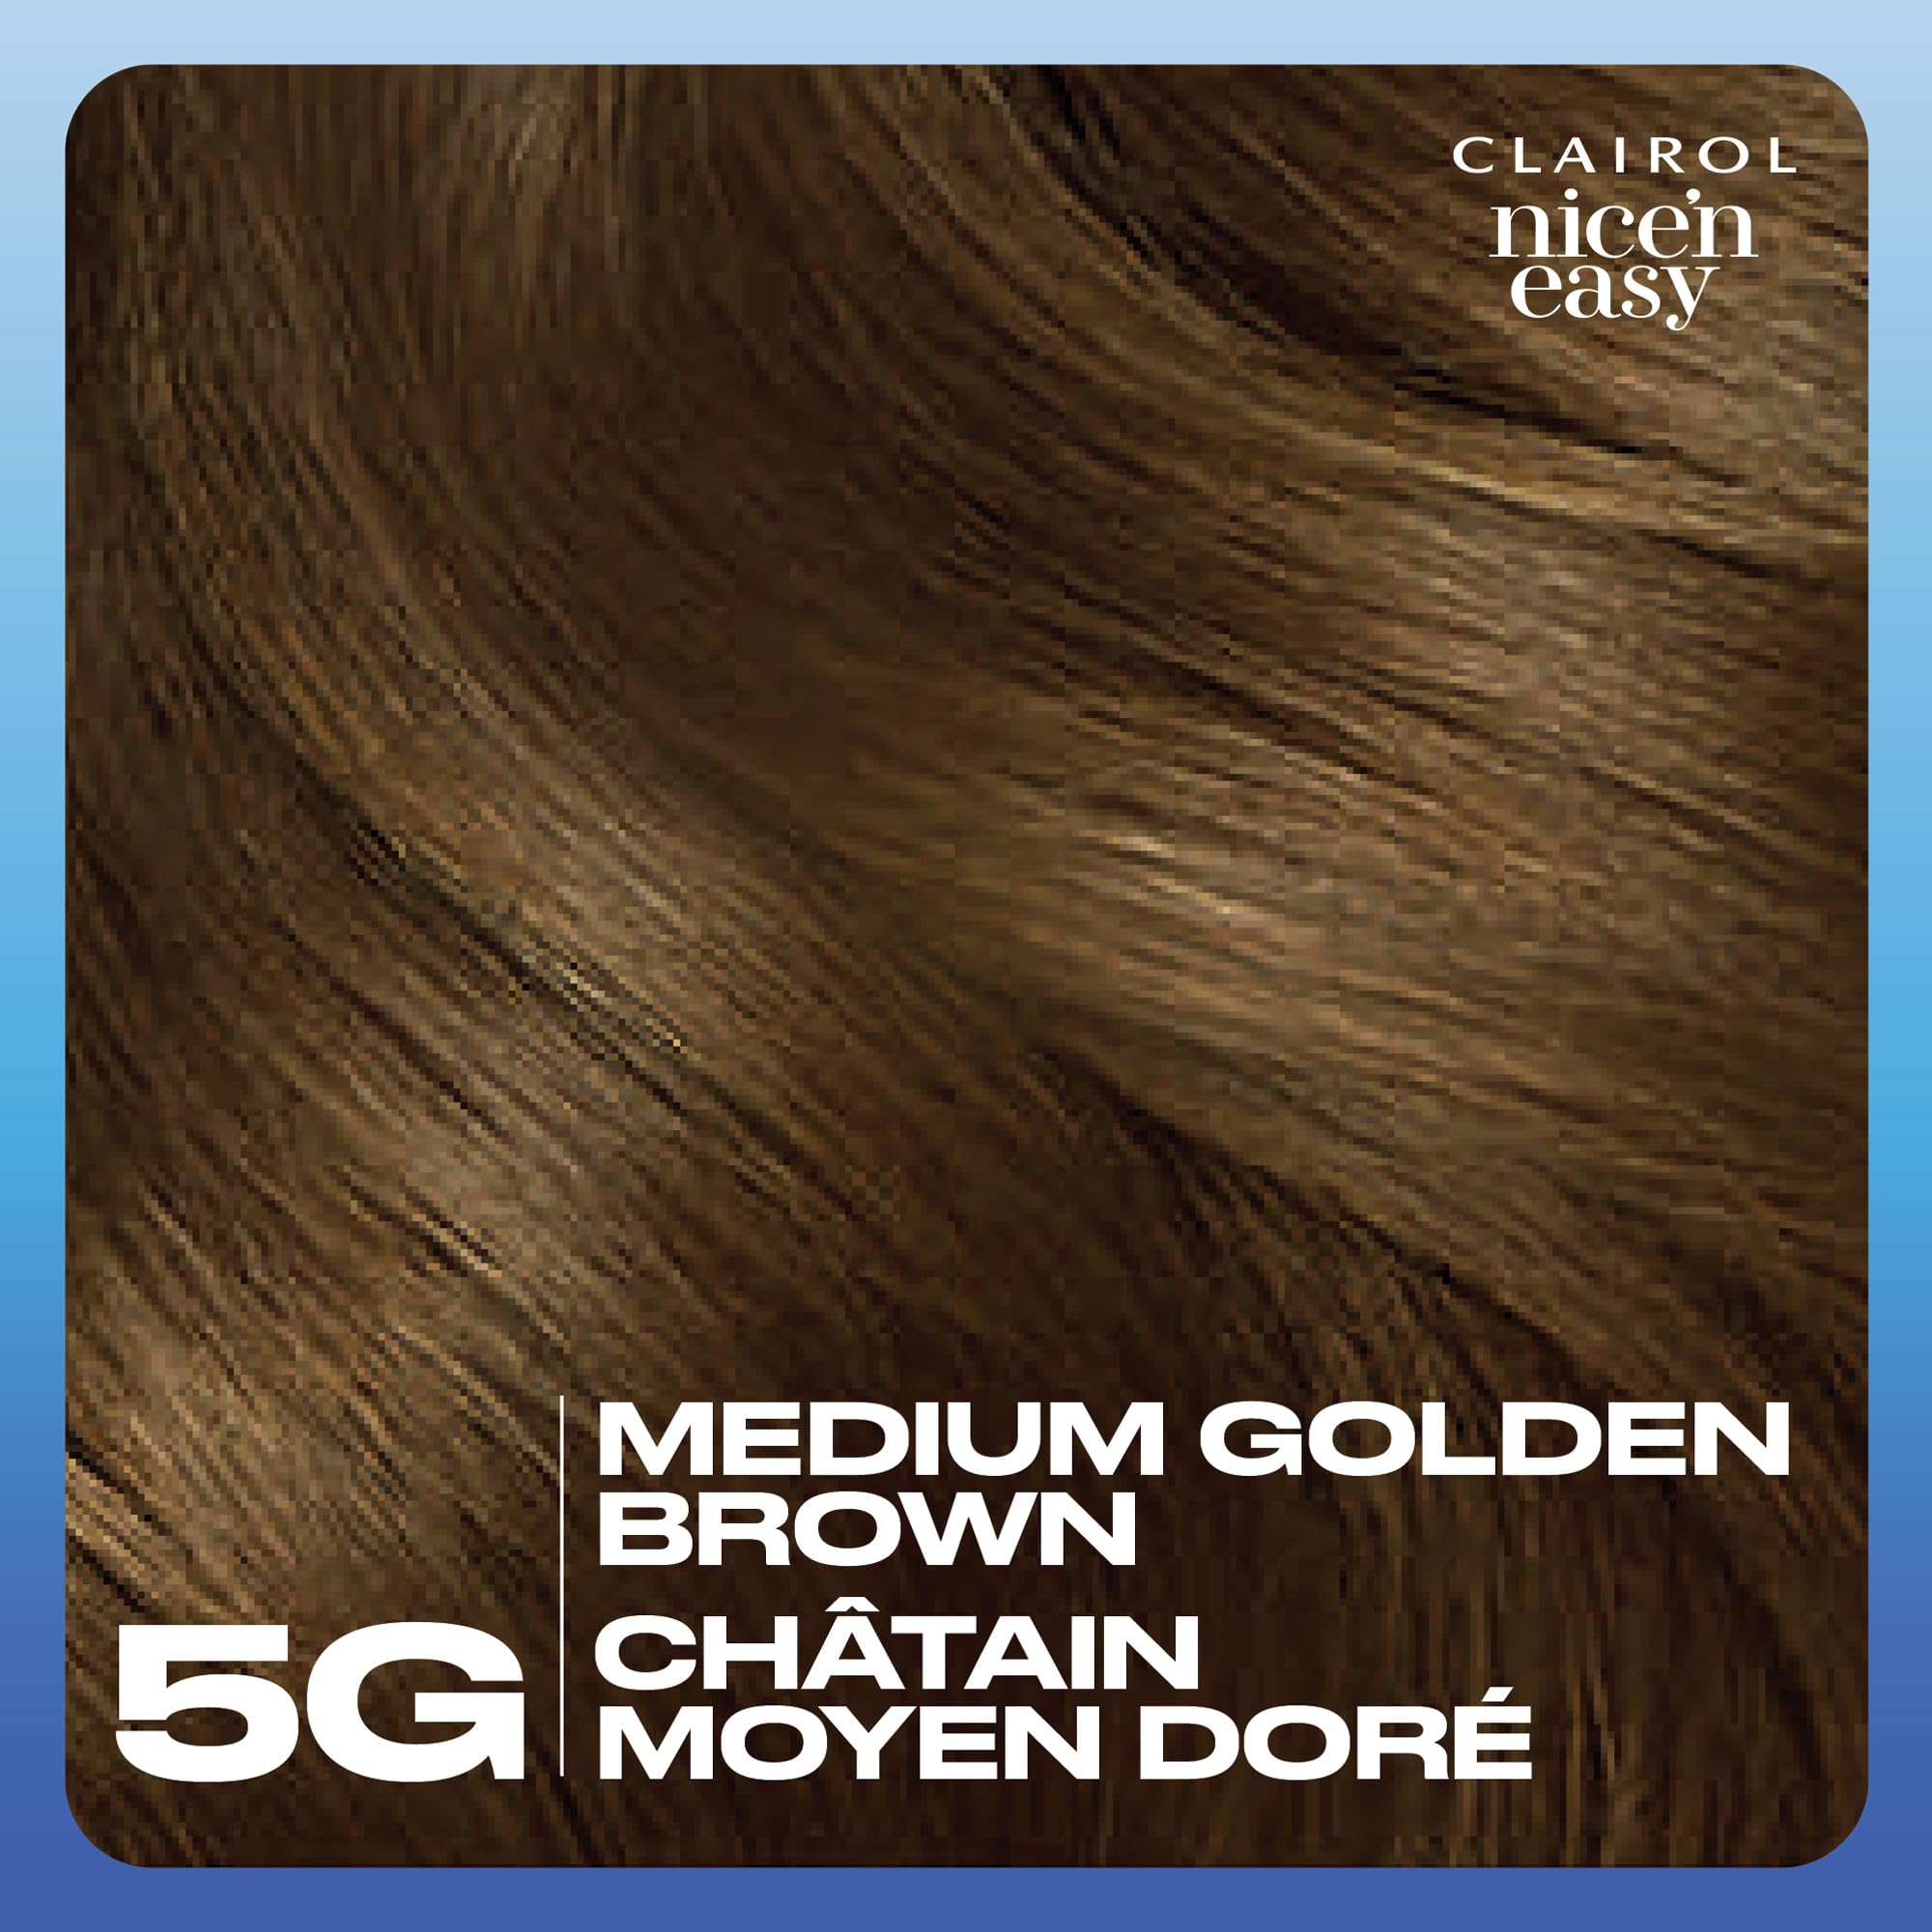 Clairol Nice'n Easy Permanent Hair Dye, 5G Medium Golden Brown Hair Color, 1 Count